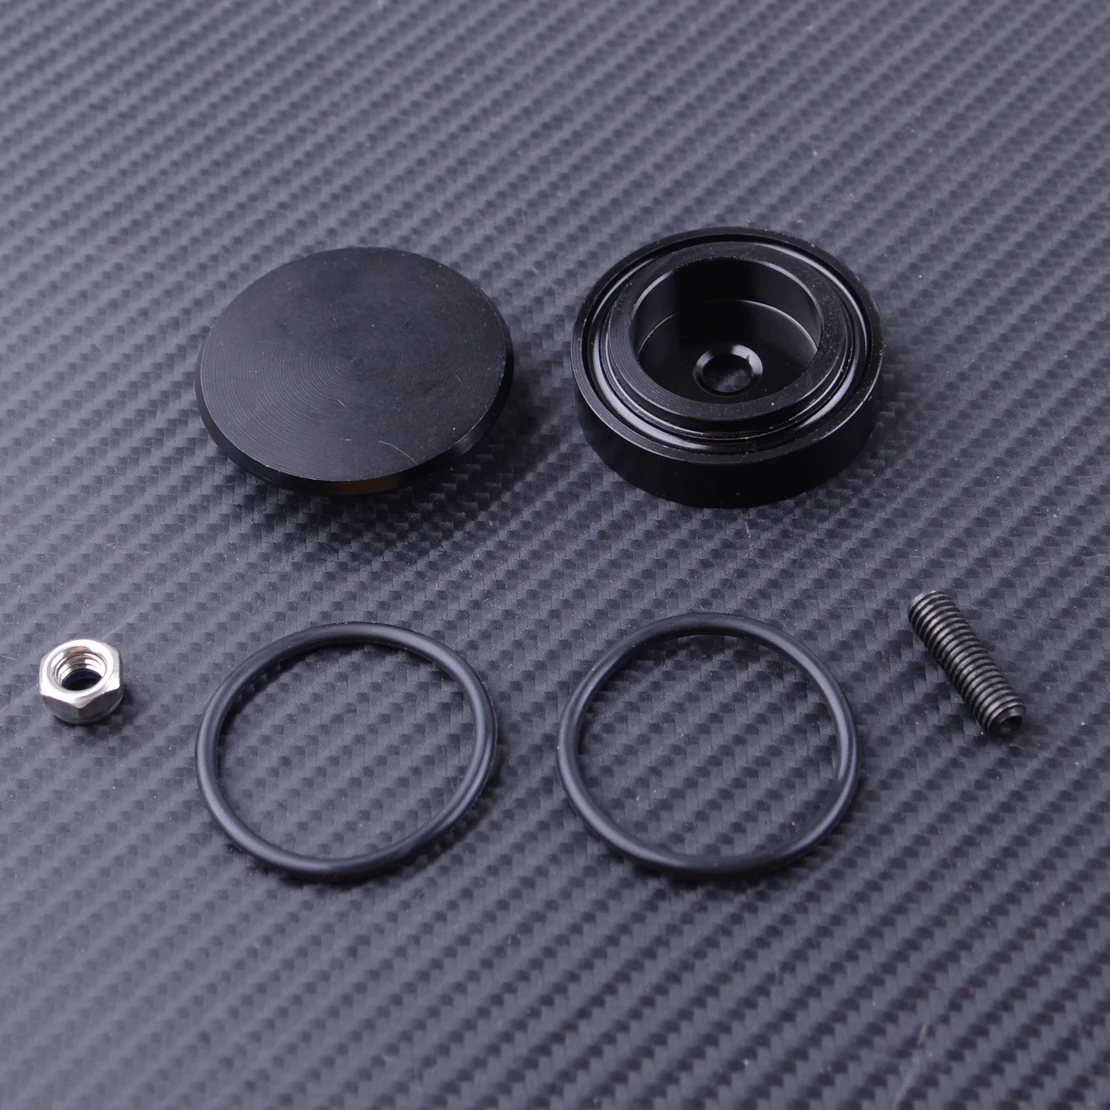 

DWCX 6pcs Black Car Rear Wiper Delete Kit Block Off Plug Cap Fit For Integra Honda Civic Si Acura RSX